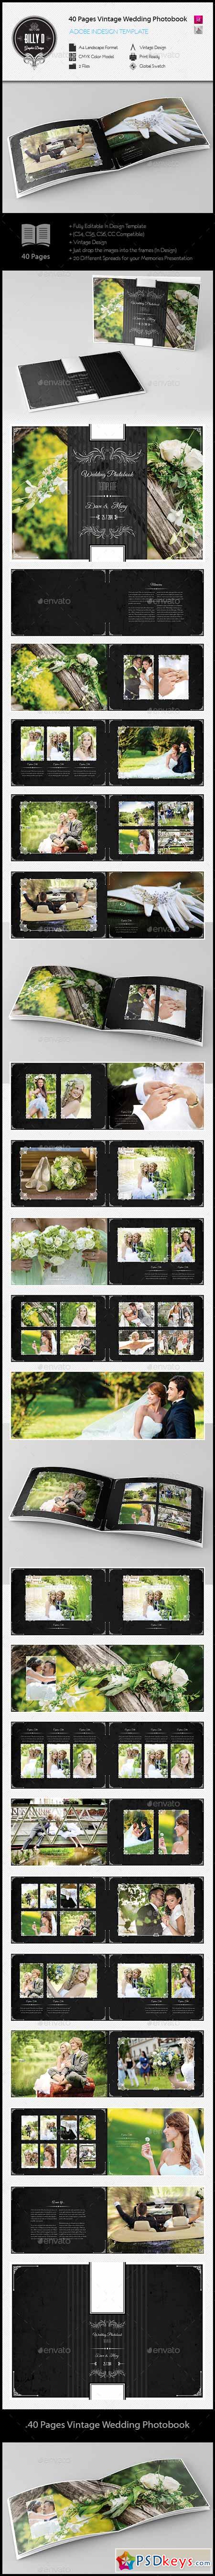 40 Pages Vintage Wedding Photobook Template 8608300